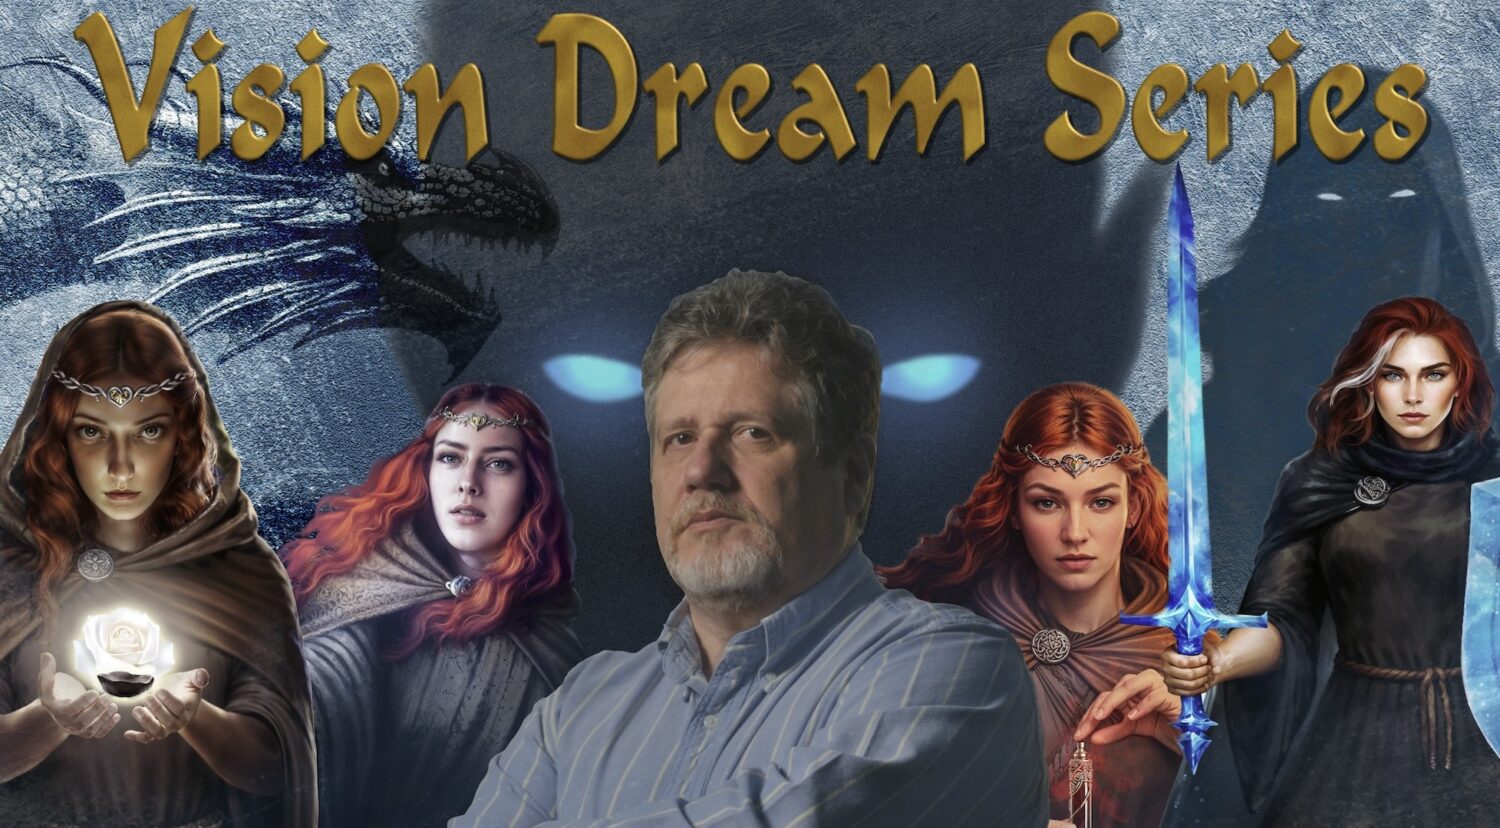 Vision Dream Series by Robert Clifton Storey Jr